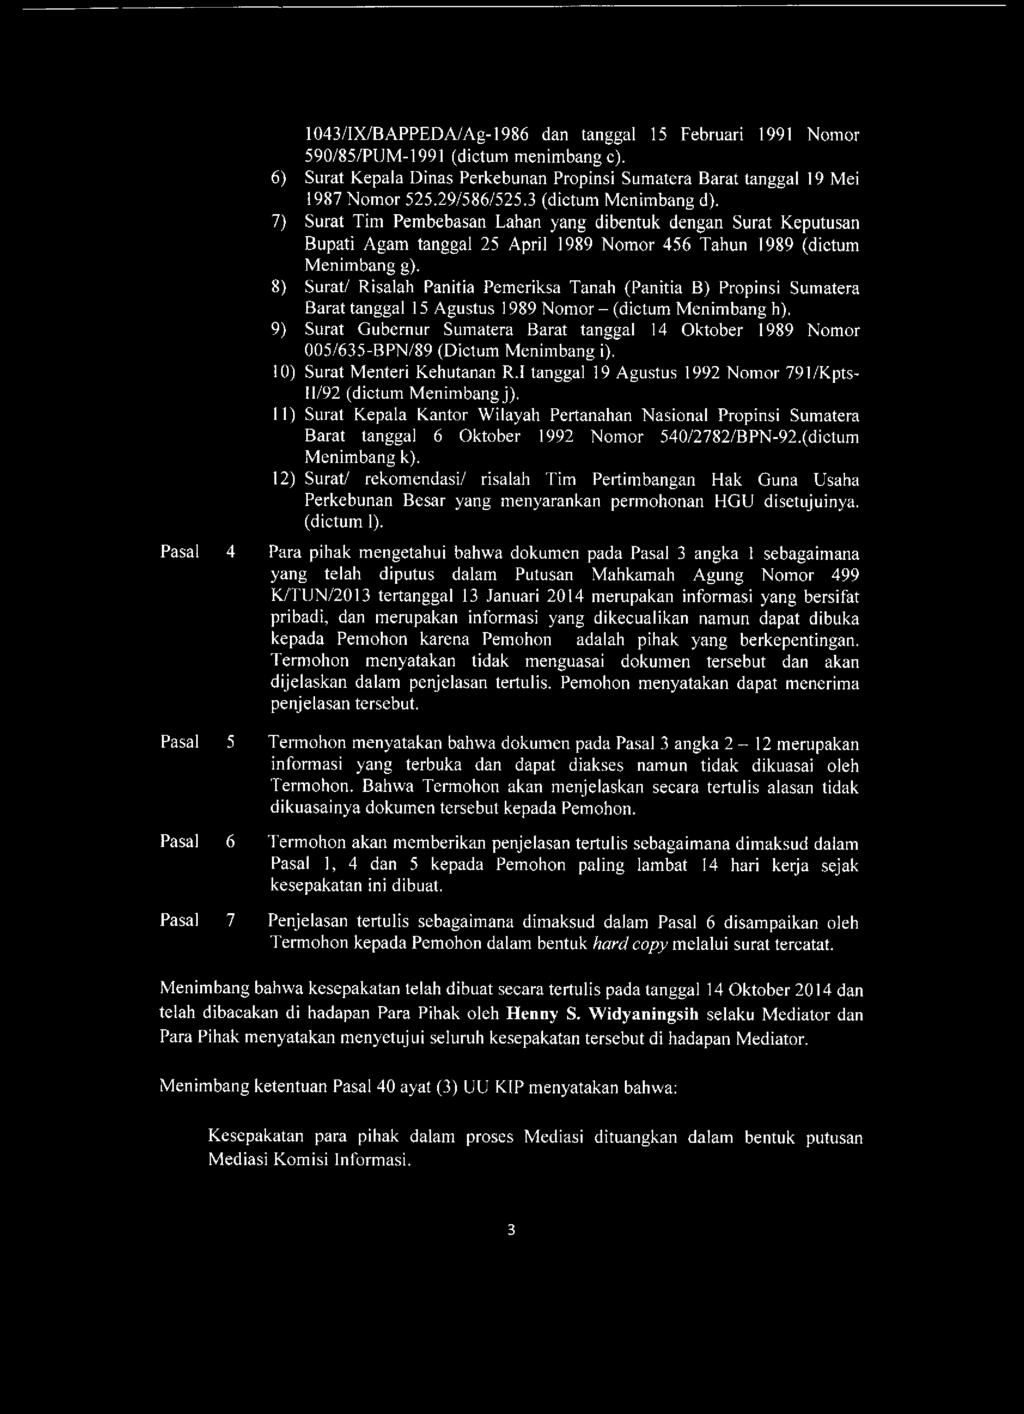 8) Surat/ Risalah Panitia Pemeriksa Tanah (Panitia B) Propinsi Sumatera Barat tanggal 15 Agustus 1989 Nomor - (dictum Menimbang h).